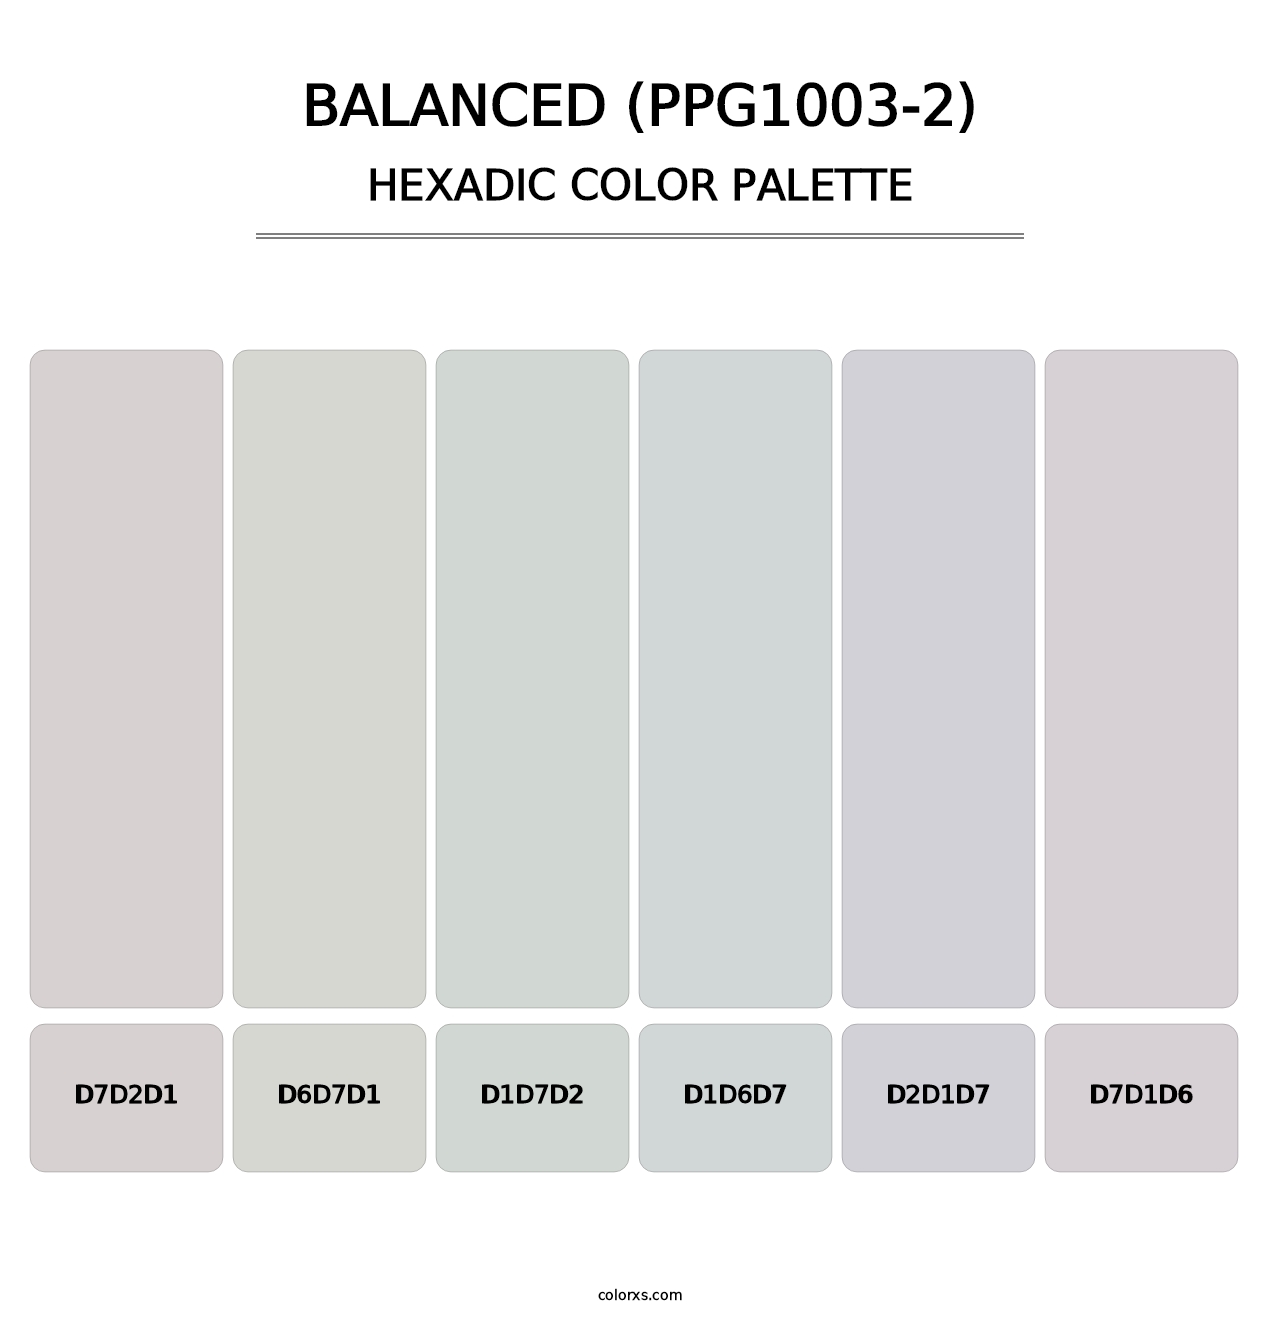 Balanced (PPG1003-2) - Hexadic Color Palette